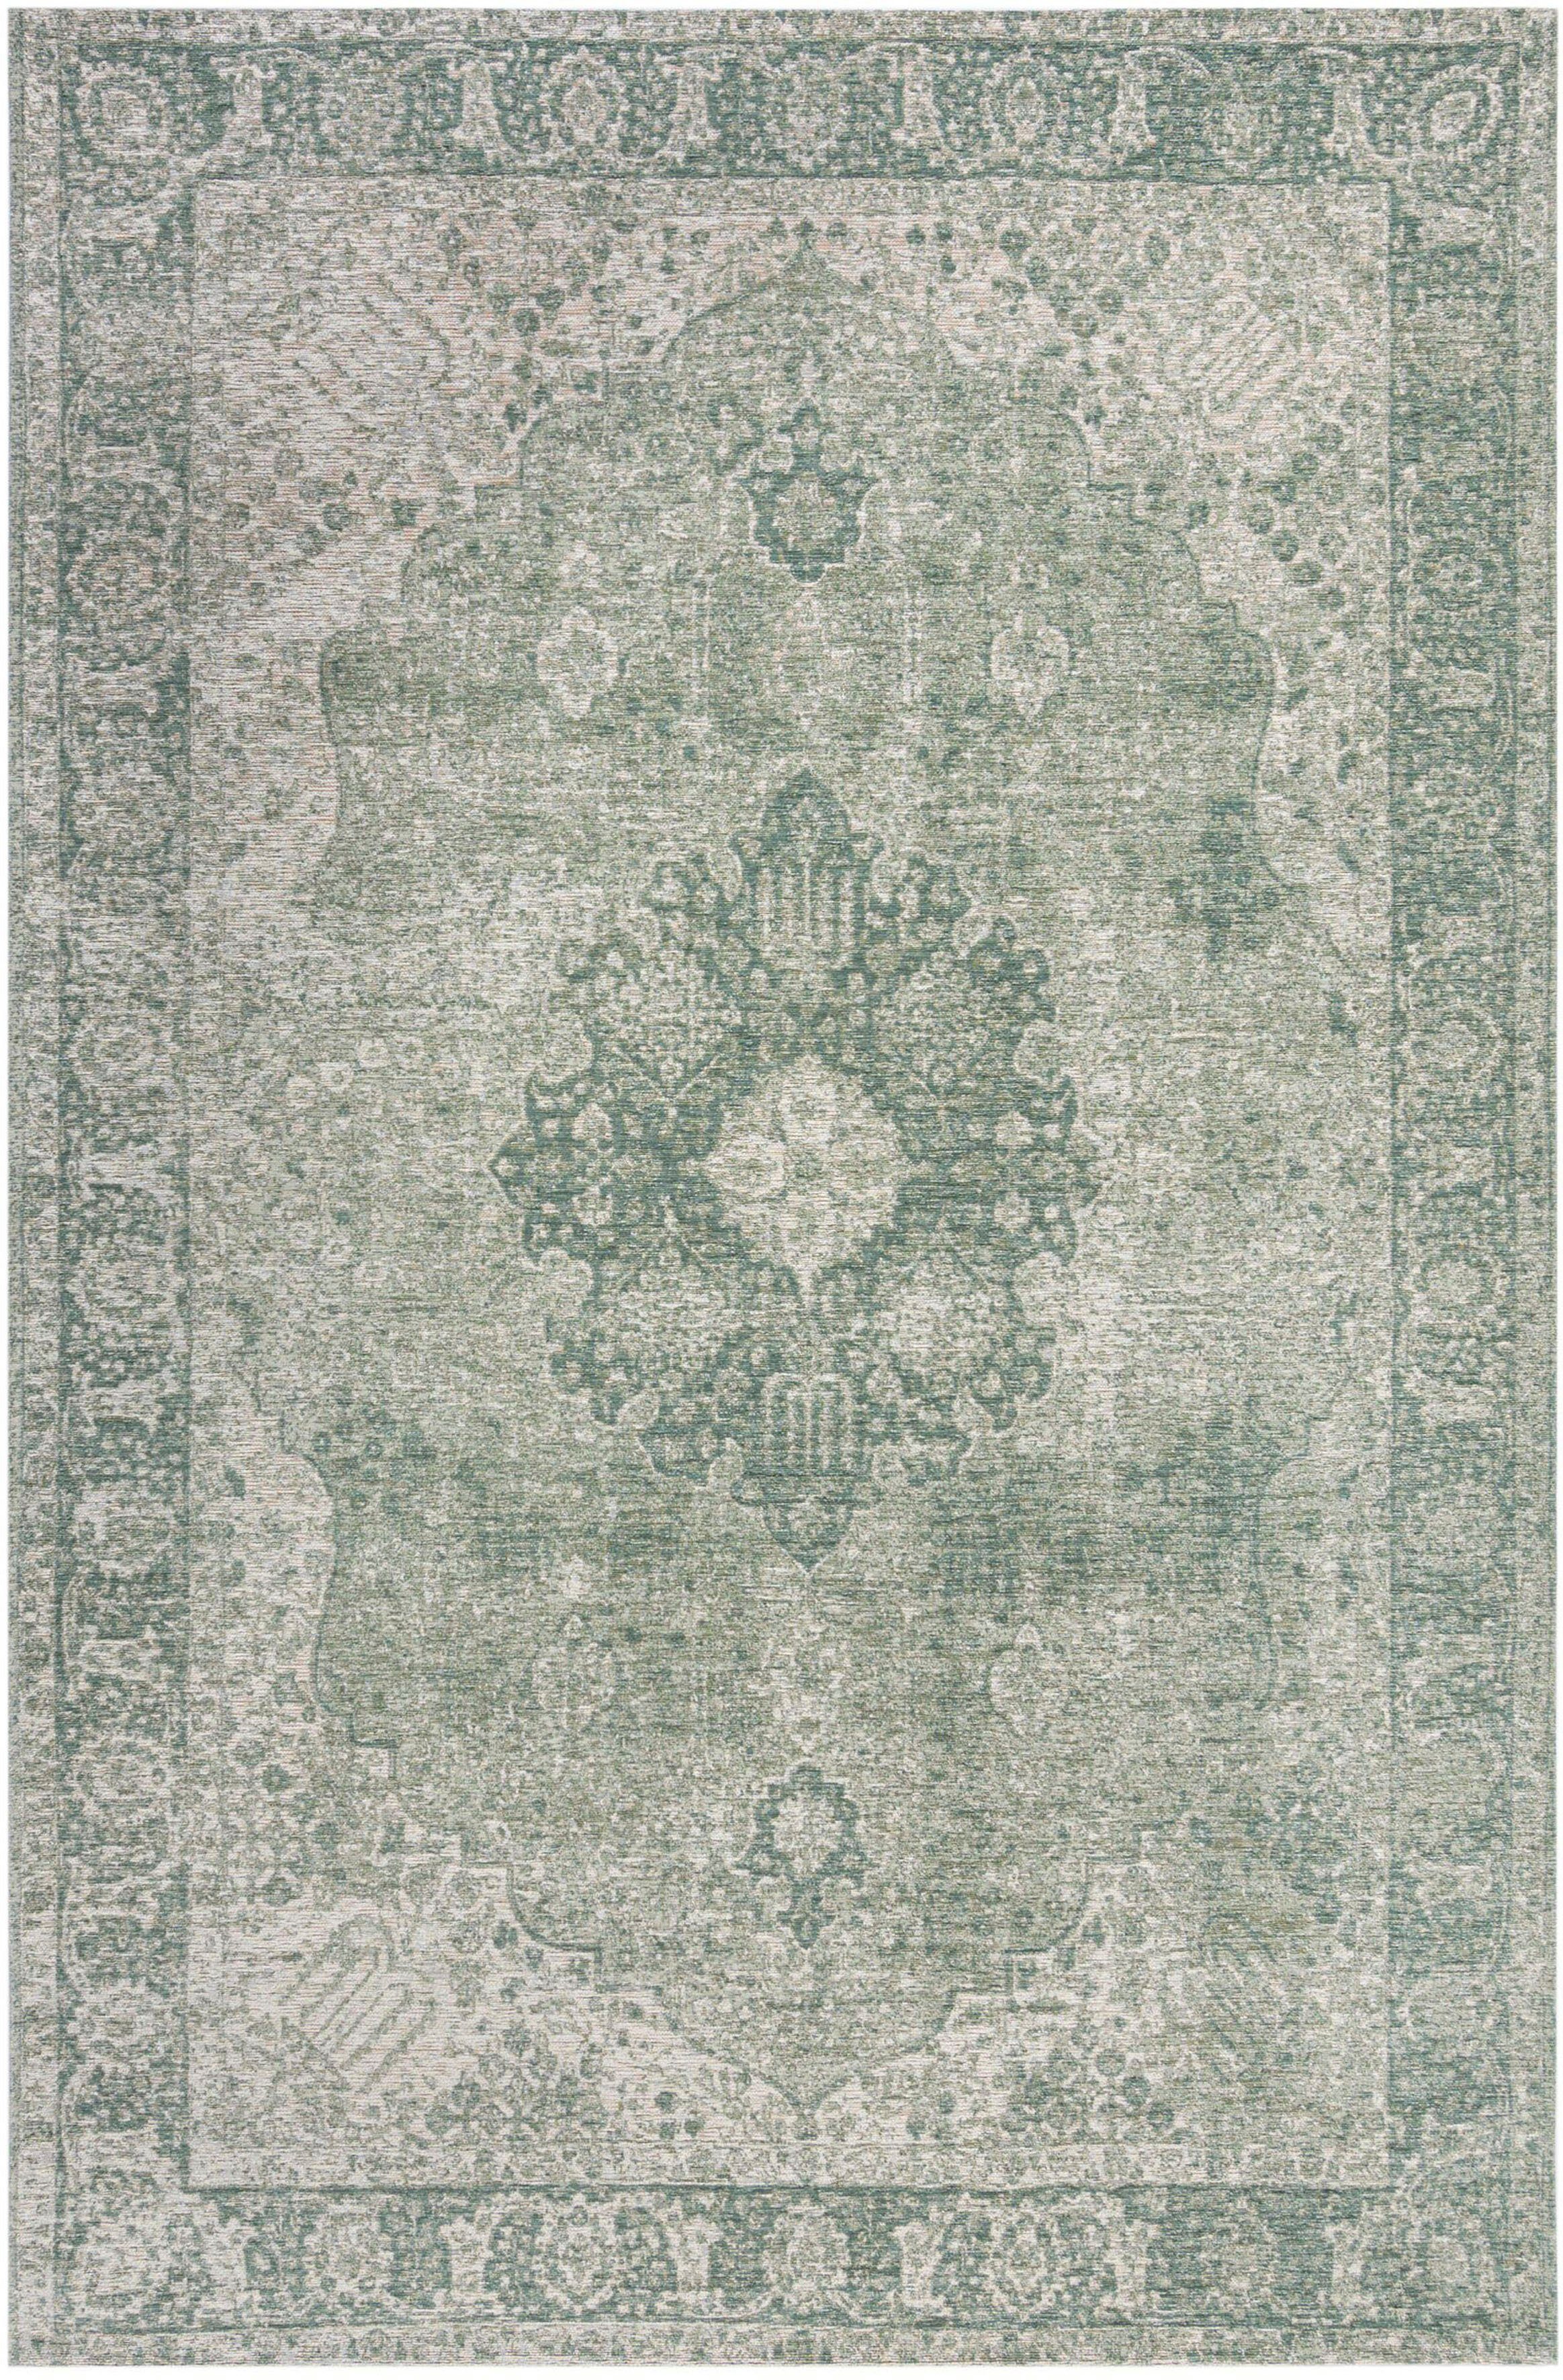 Höhe: mm, RUGS, Teppich FLAIR grün Antique, rechteckig, Vintage-Muster 4